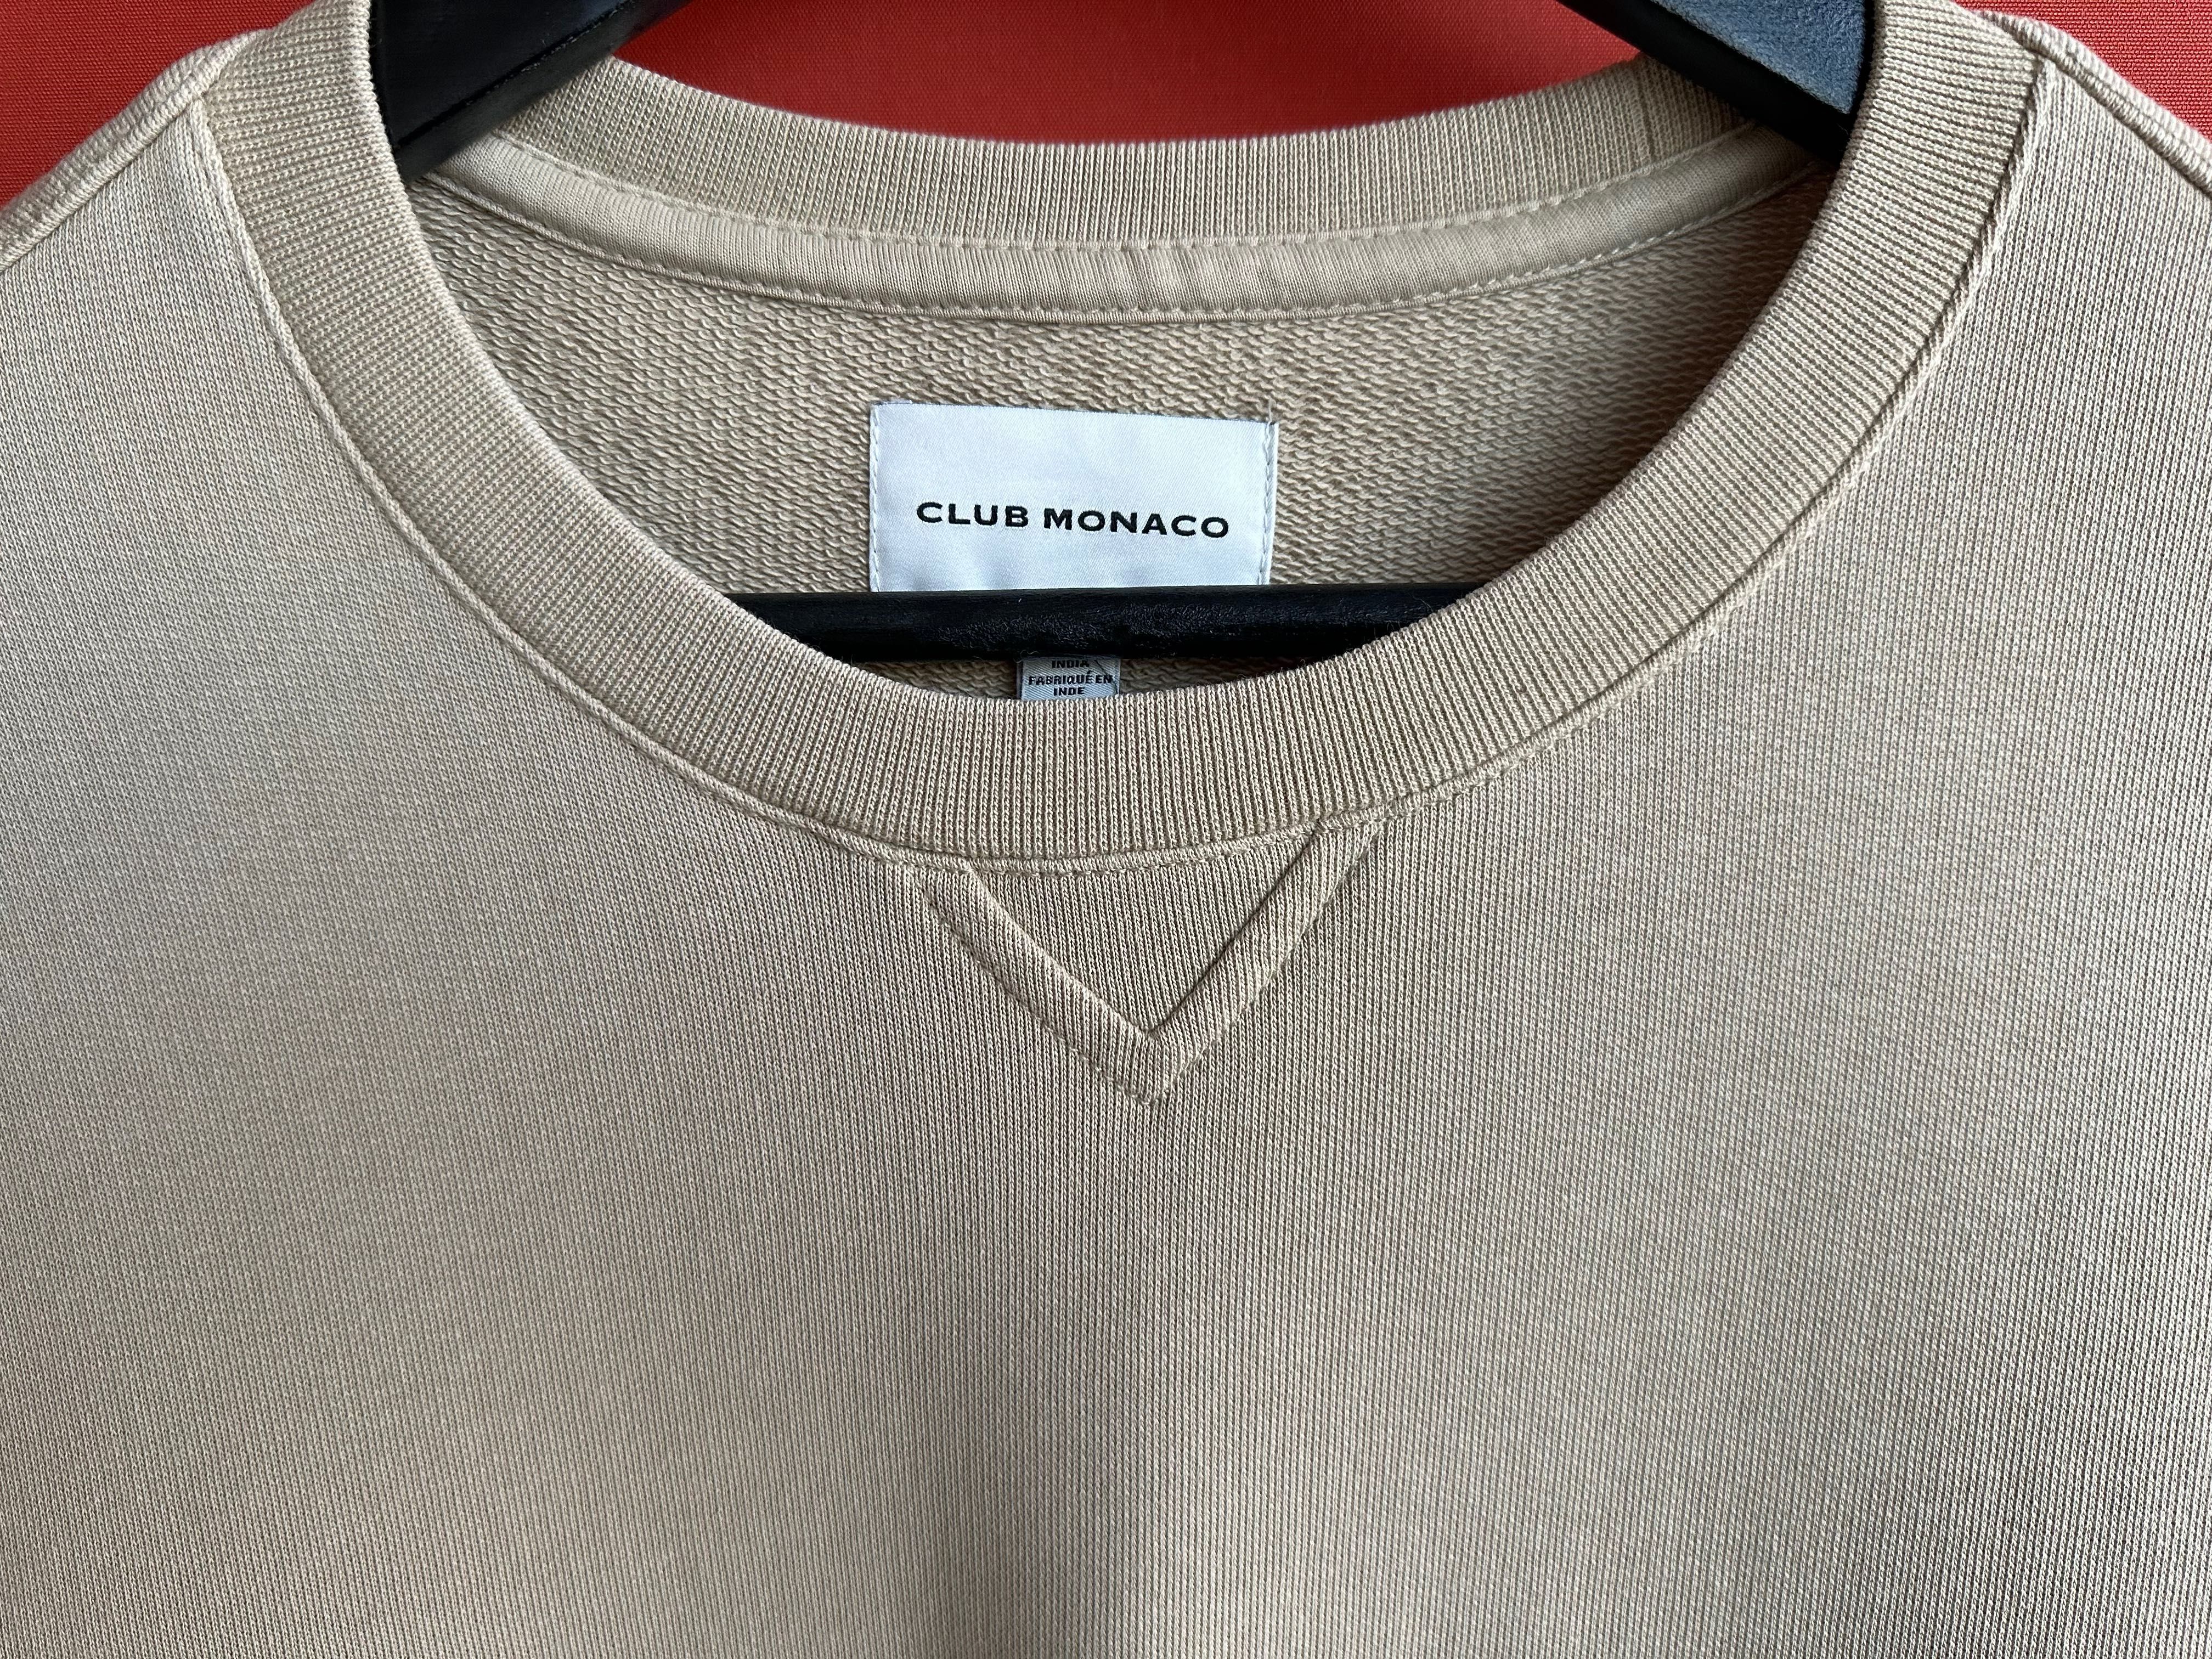 Ralph Lauren Club Monaco оригинал мужская кофта свитшот размер M L Б У